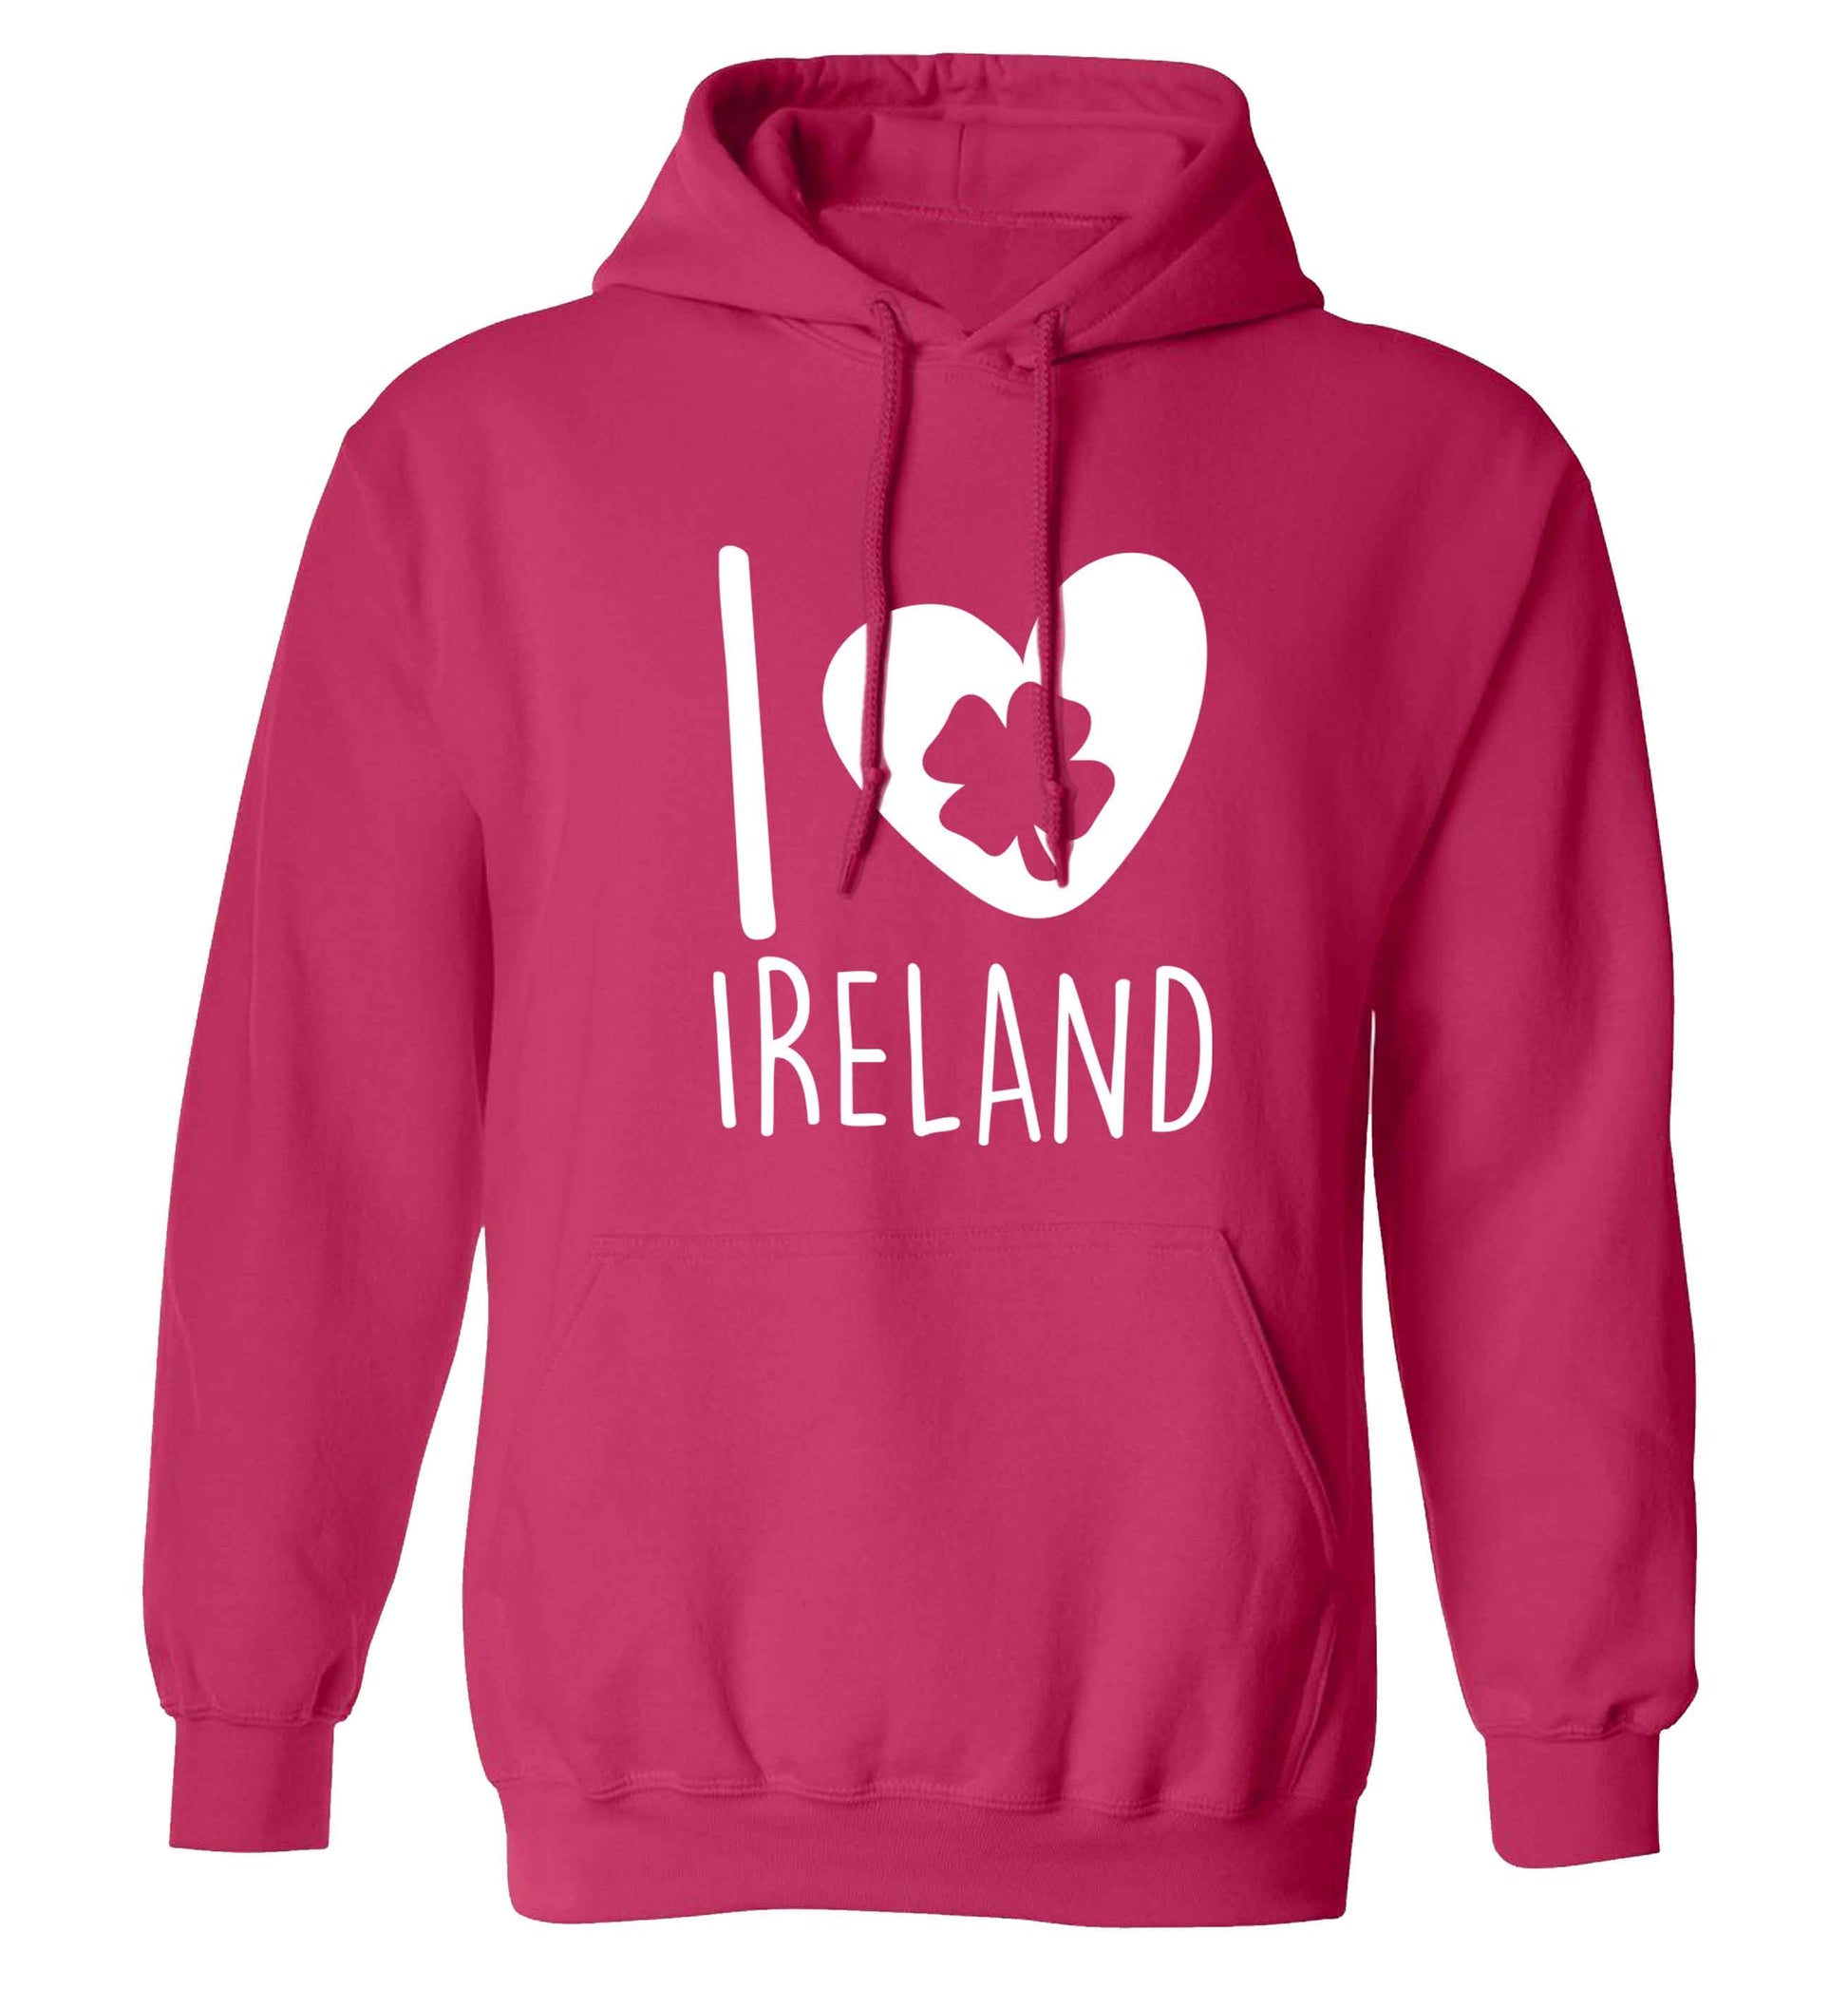 I love Ireland adults unisex pink hoodie 2XL